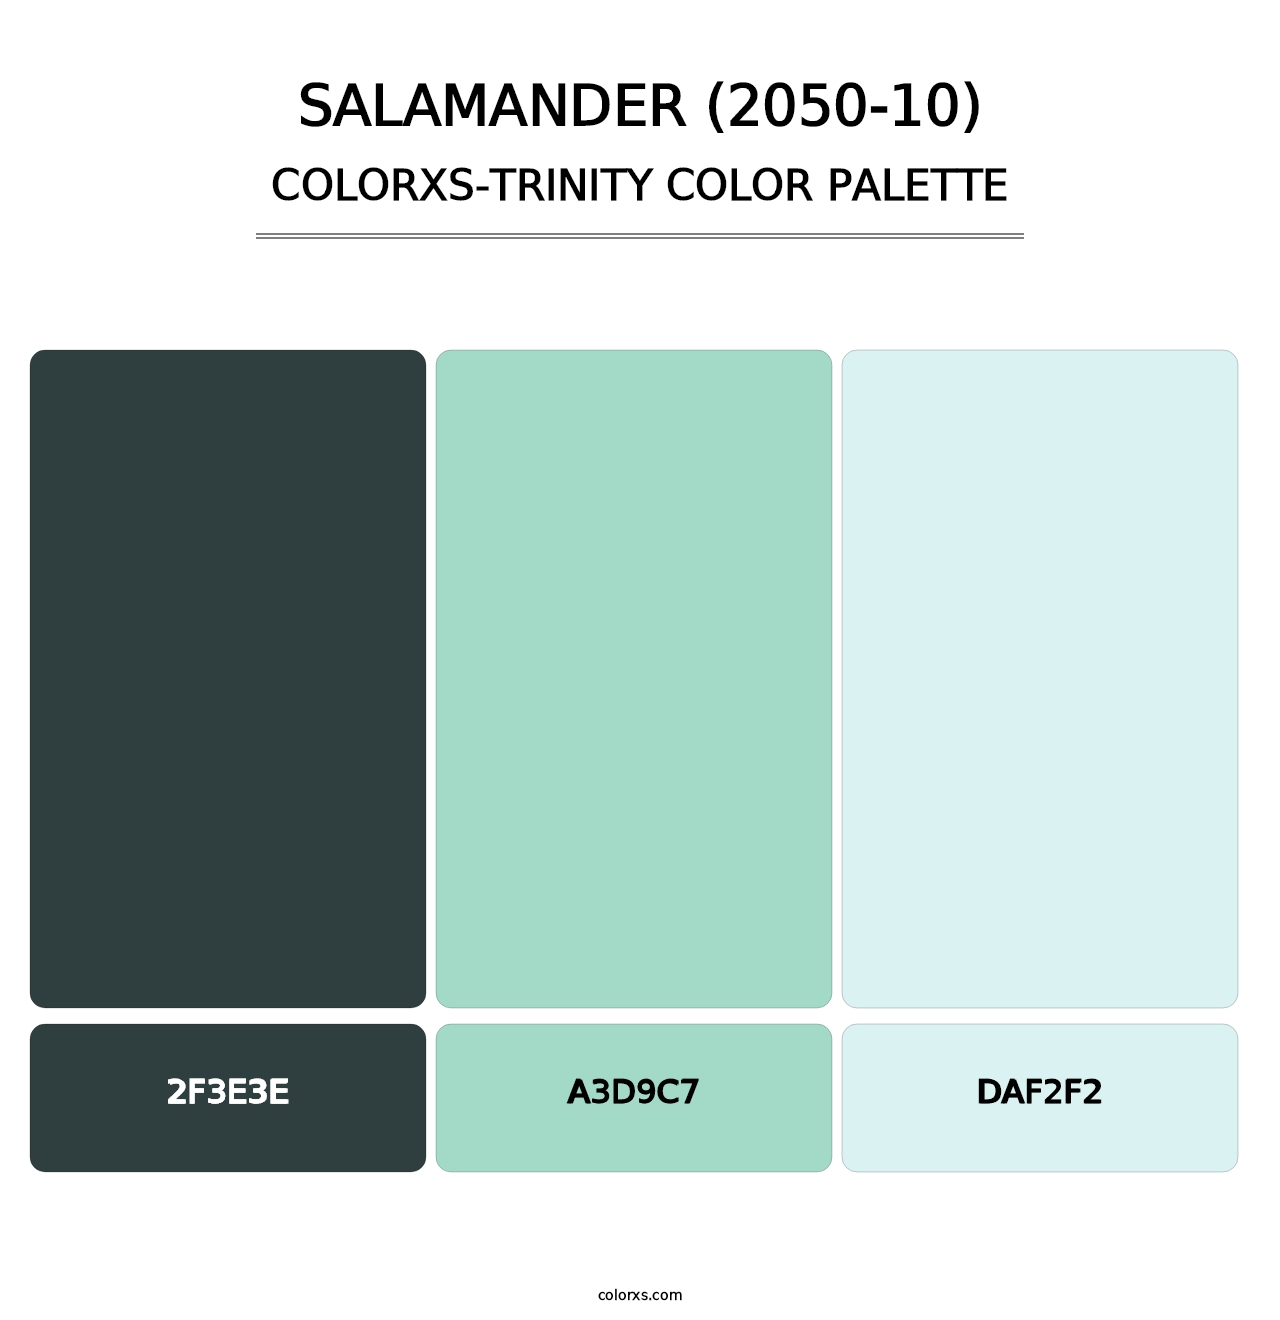 Salamander (2050-10) - Colorxs Trinity Palette